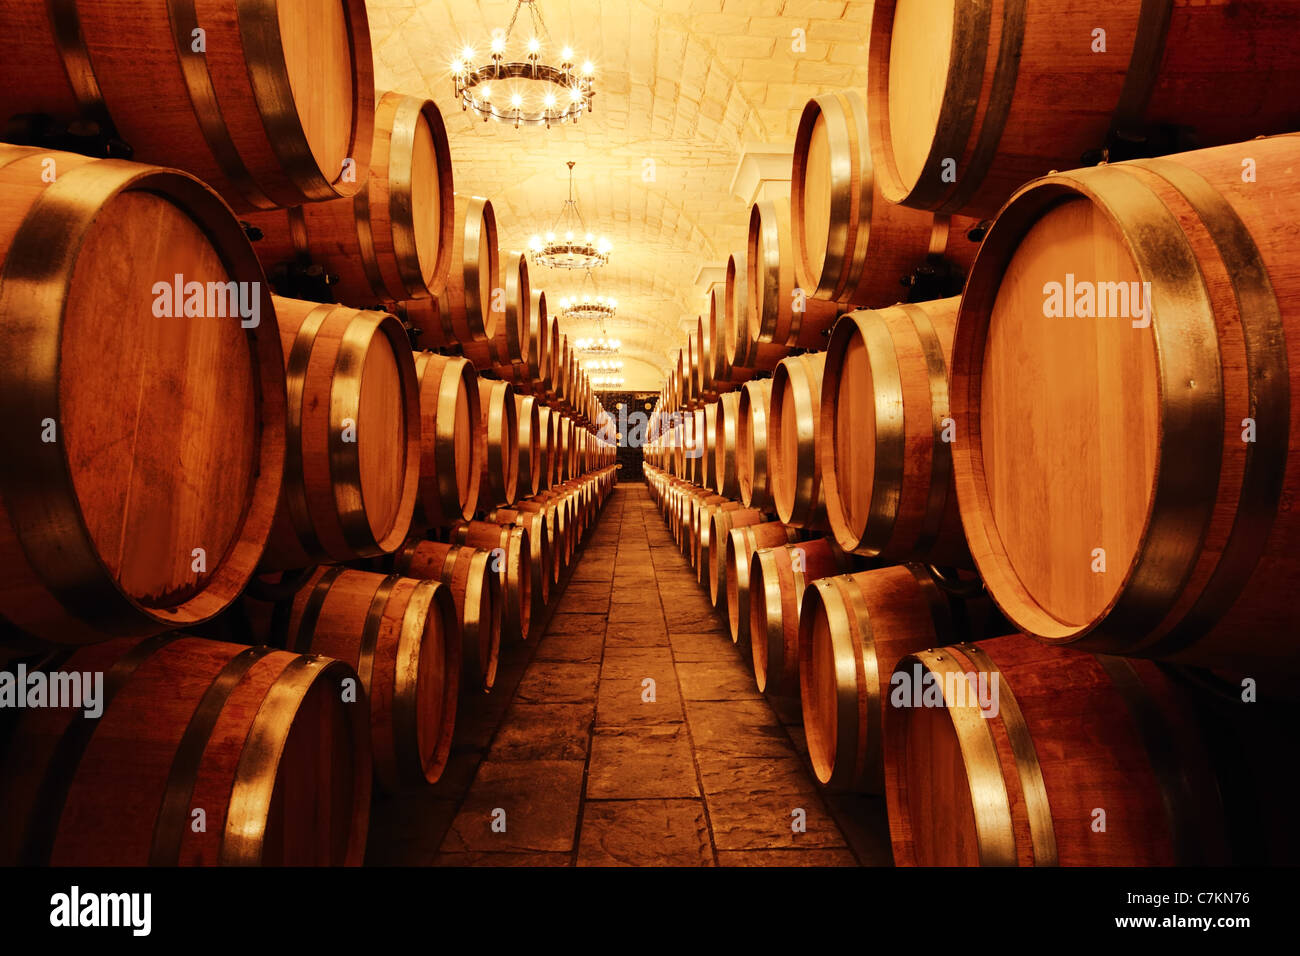 Wine cellar with barrels Stock Photo